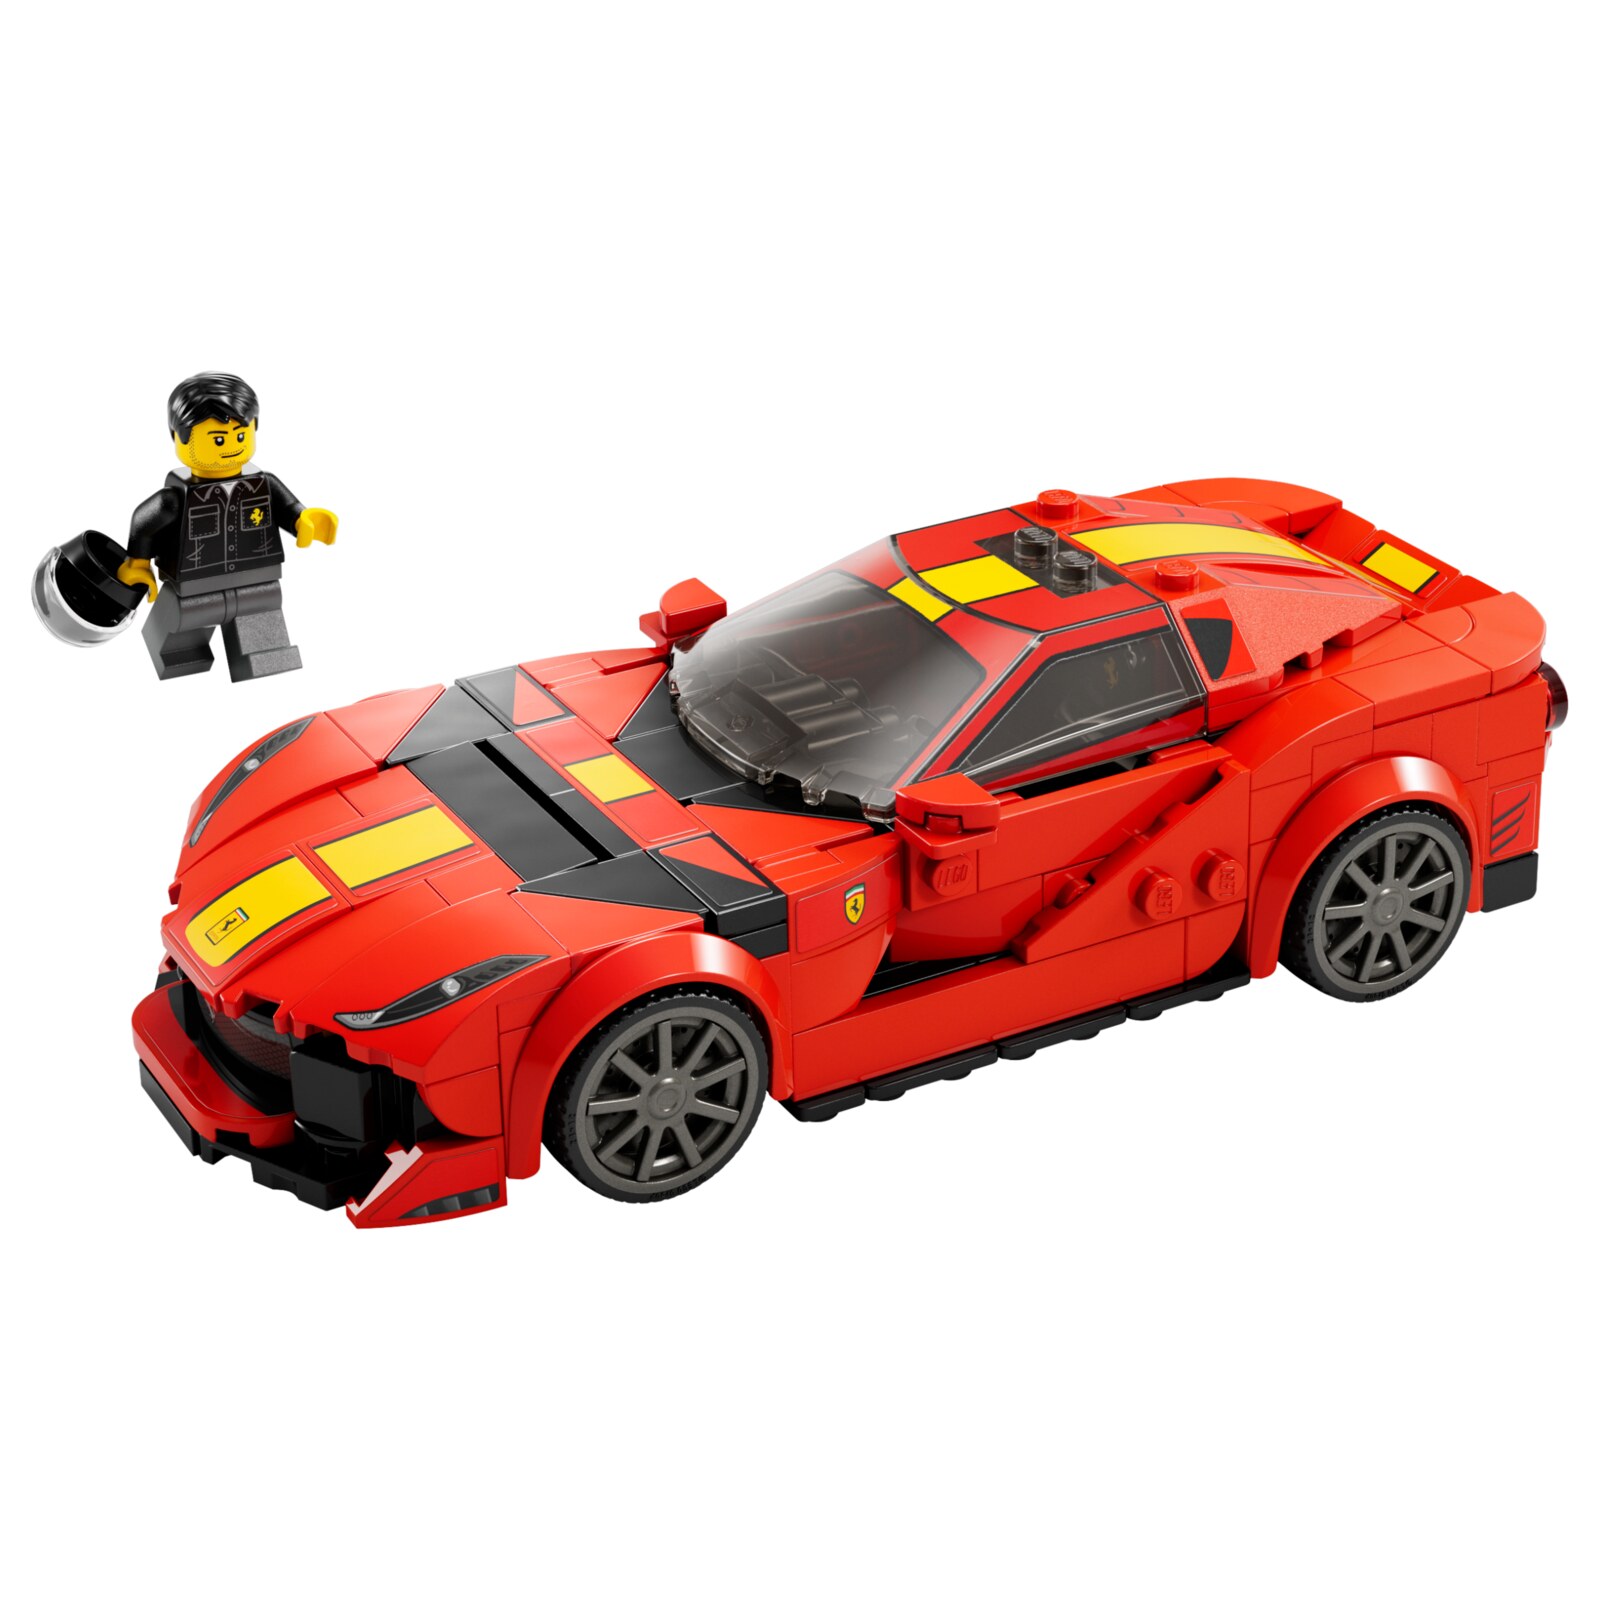 Конструктор LEGO Speed Champions Ferrari 812 Competizione, 261 деталь, 76914 конструктор lego speed champions 30342 lamborghini huracan super trofeo evo